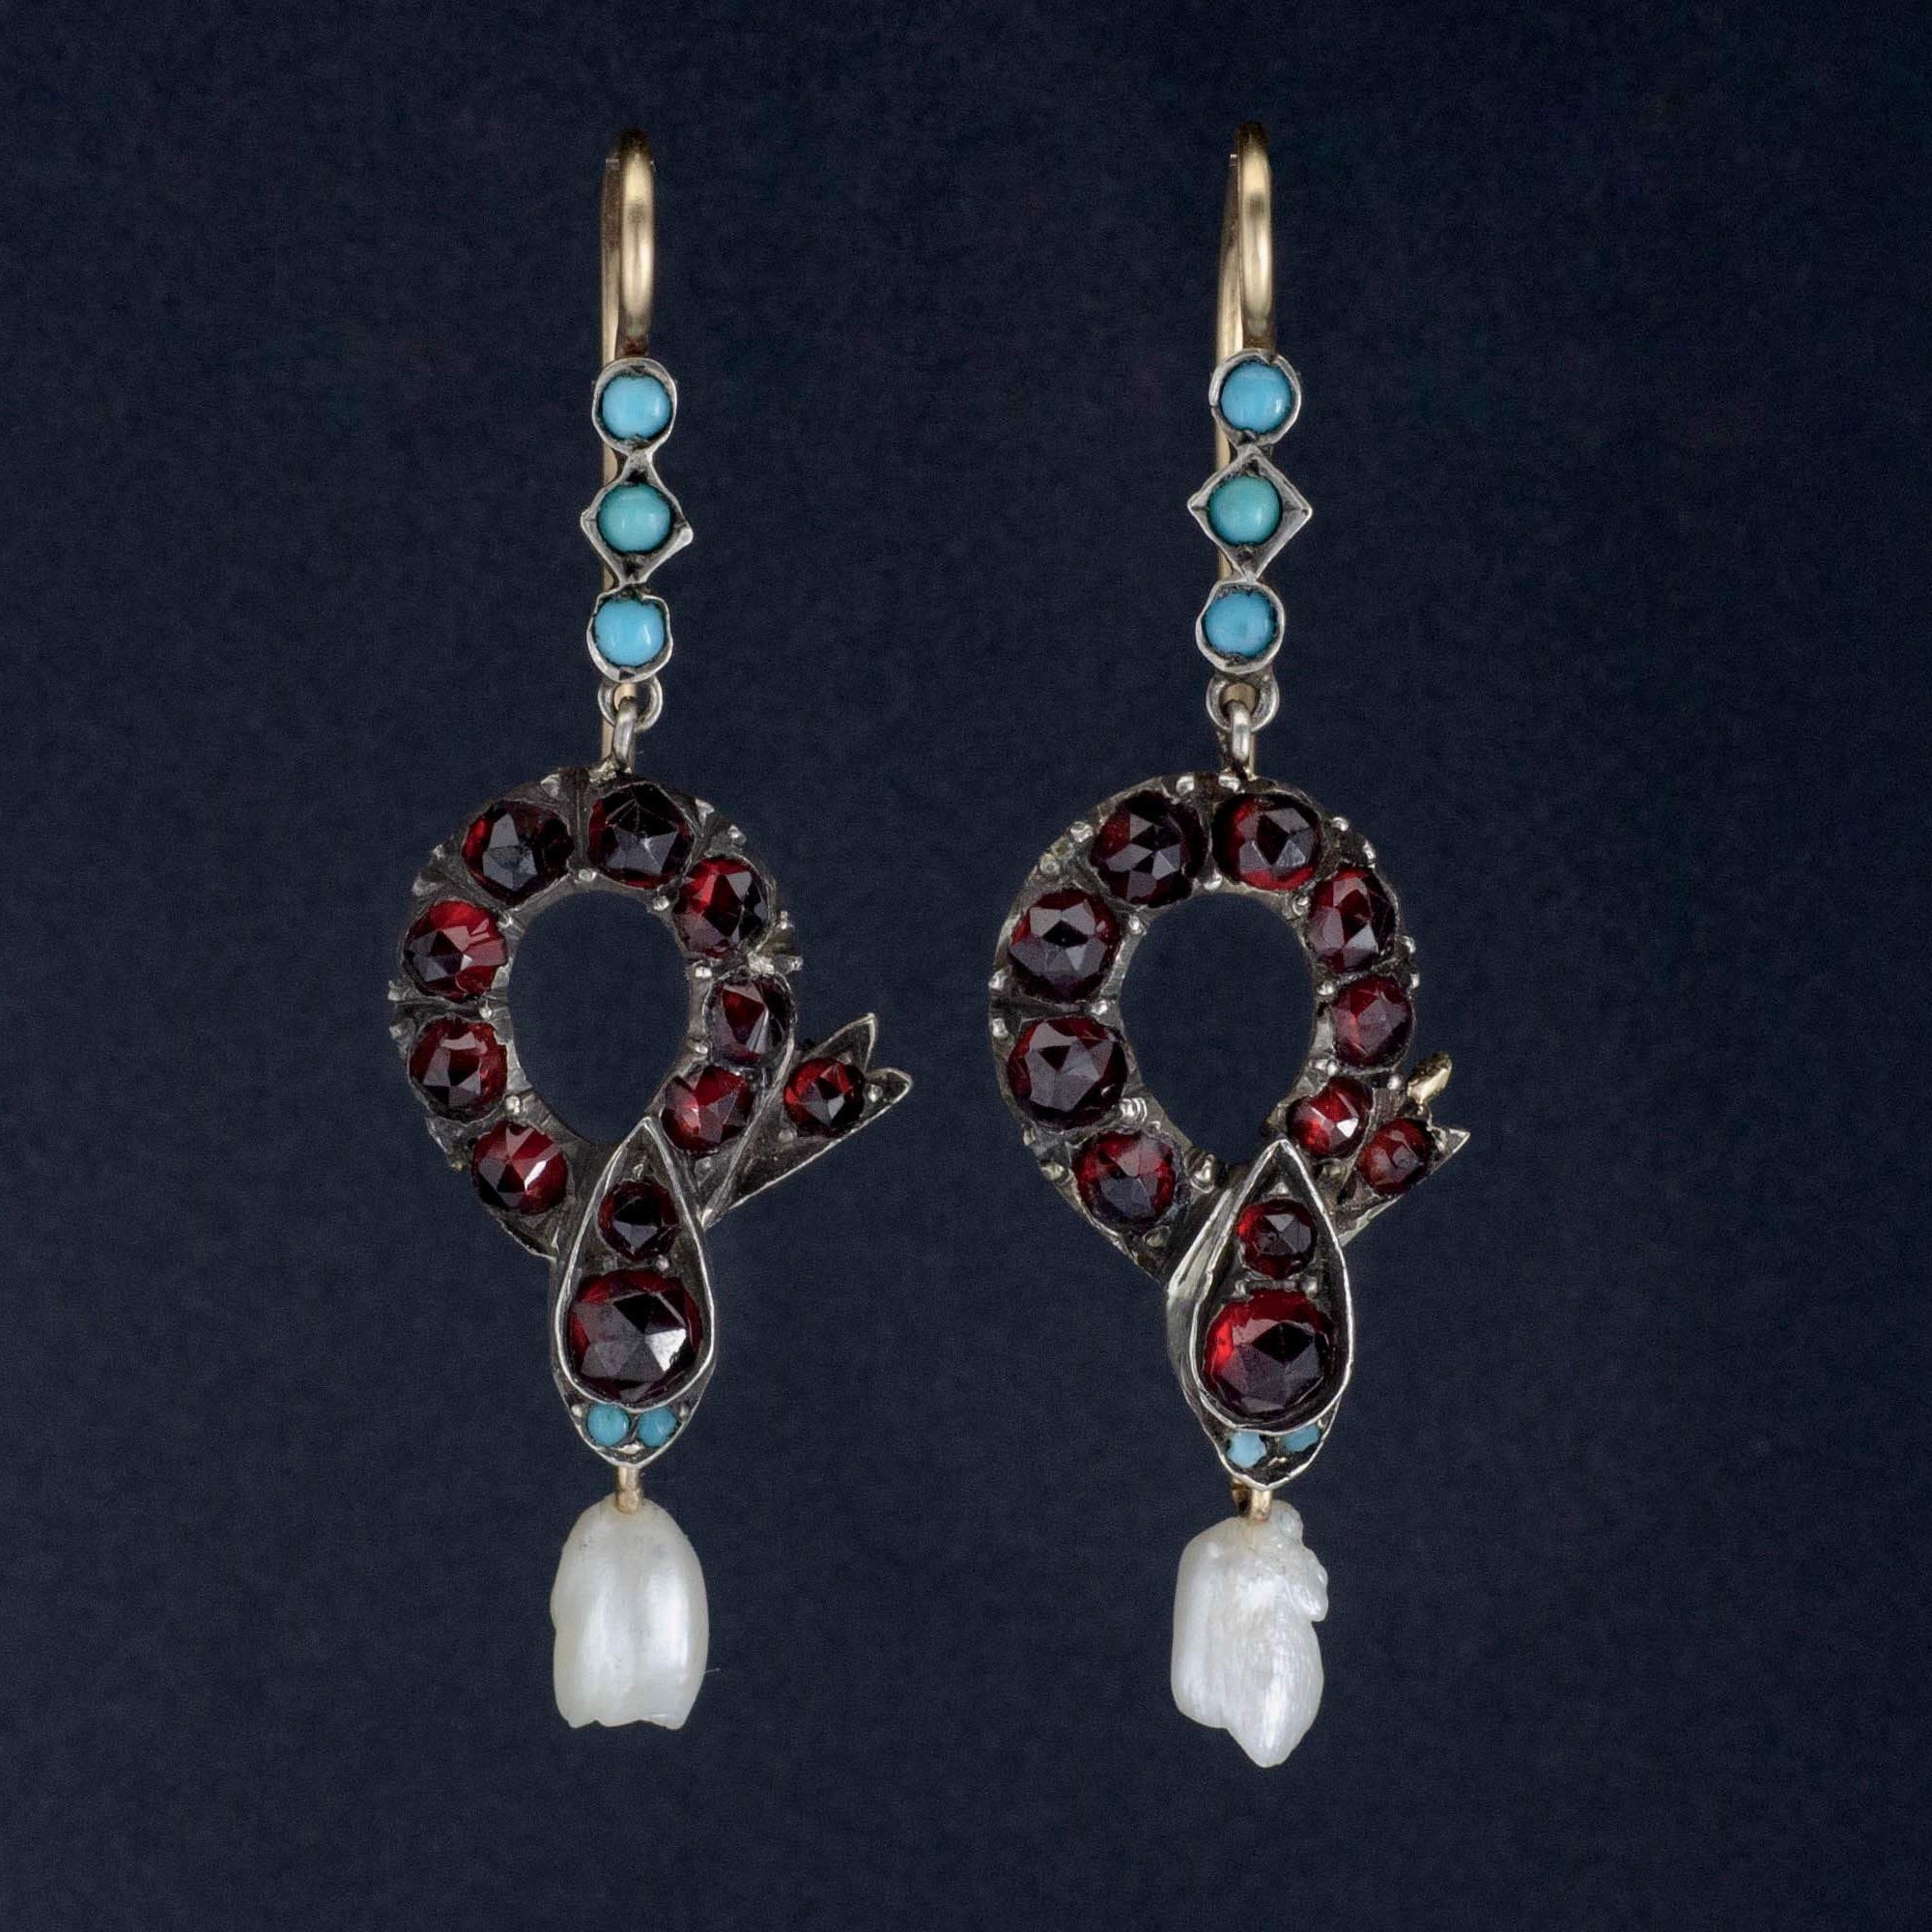 Antique Snake Earrings | Garnet & Turquoise Snake Earrings  | 14k Gold and Silver Earrings| Pin Conversion Earrings